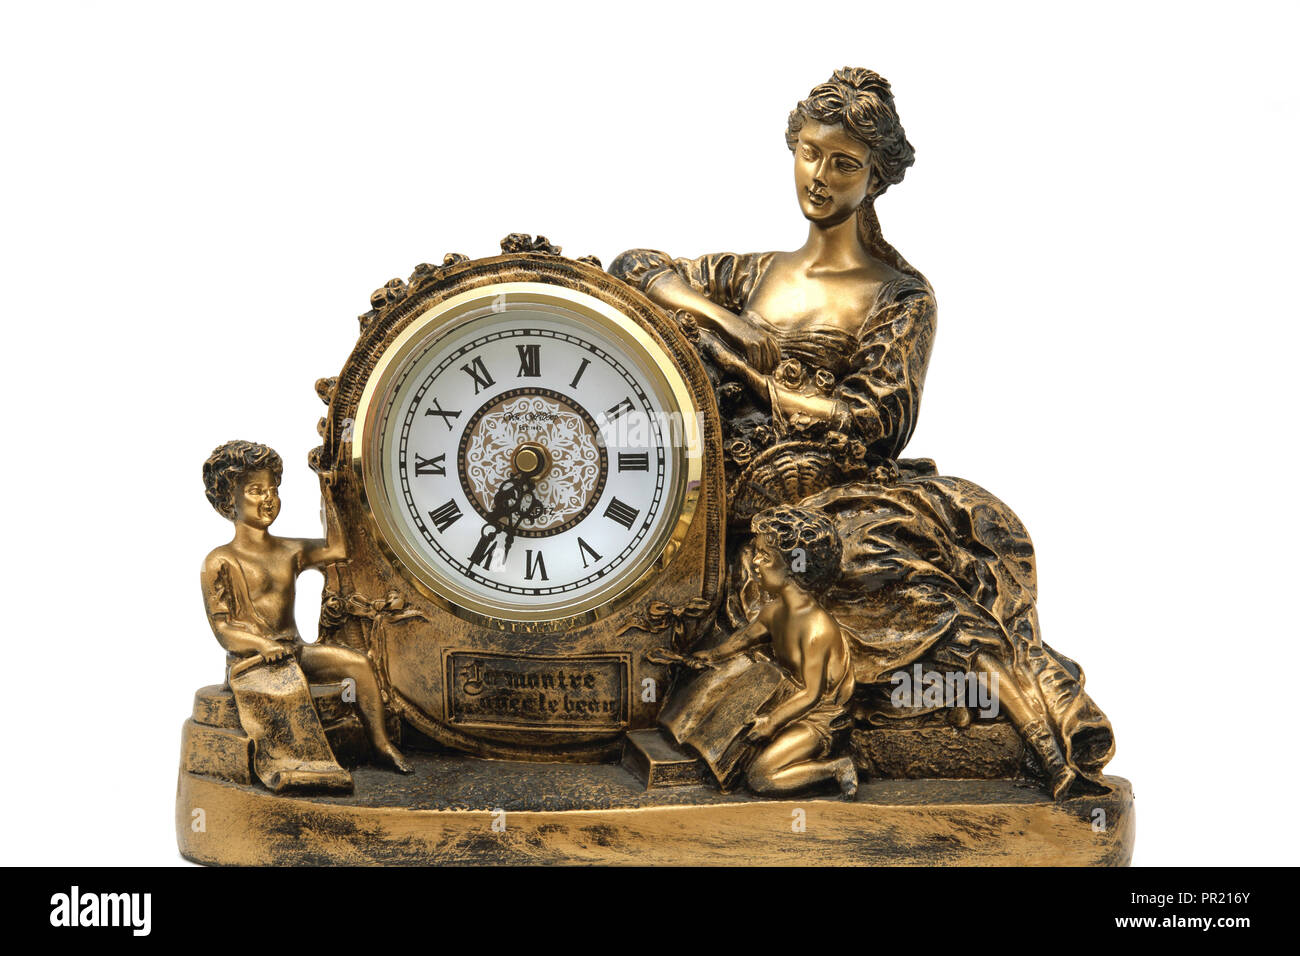 W.M Widdop Art Nouveau Style Gold Table Clock Stock Photo